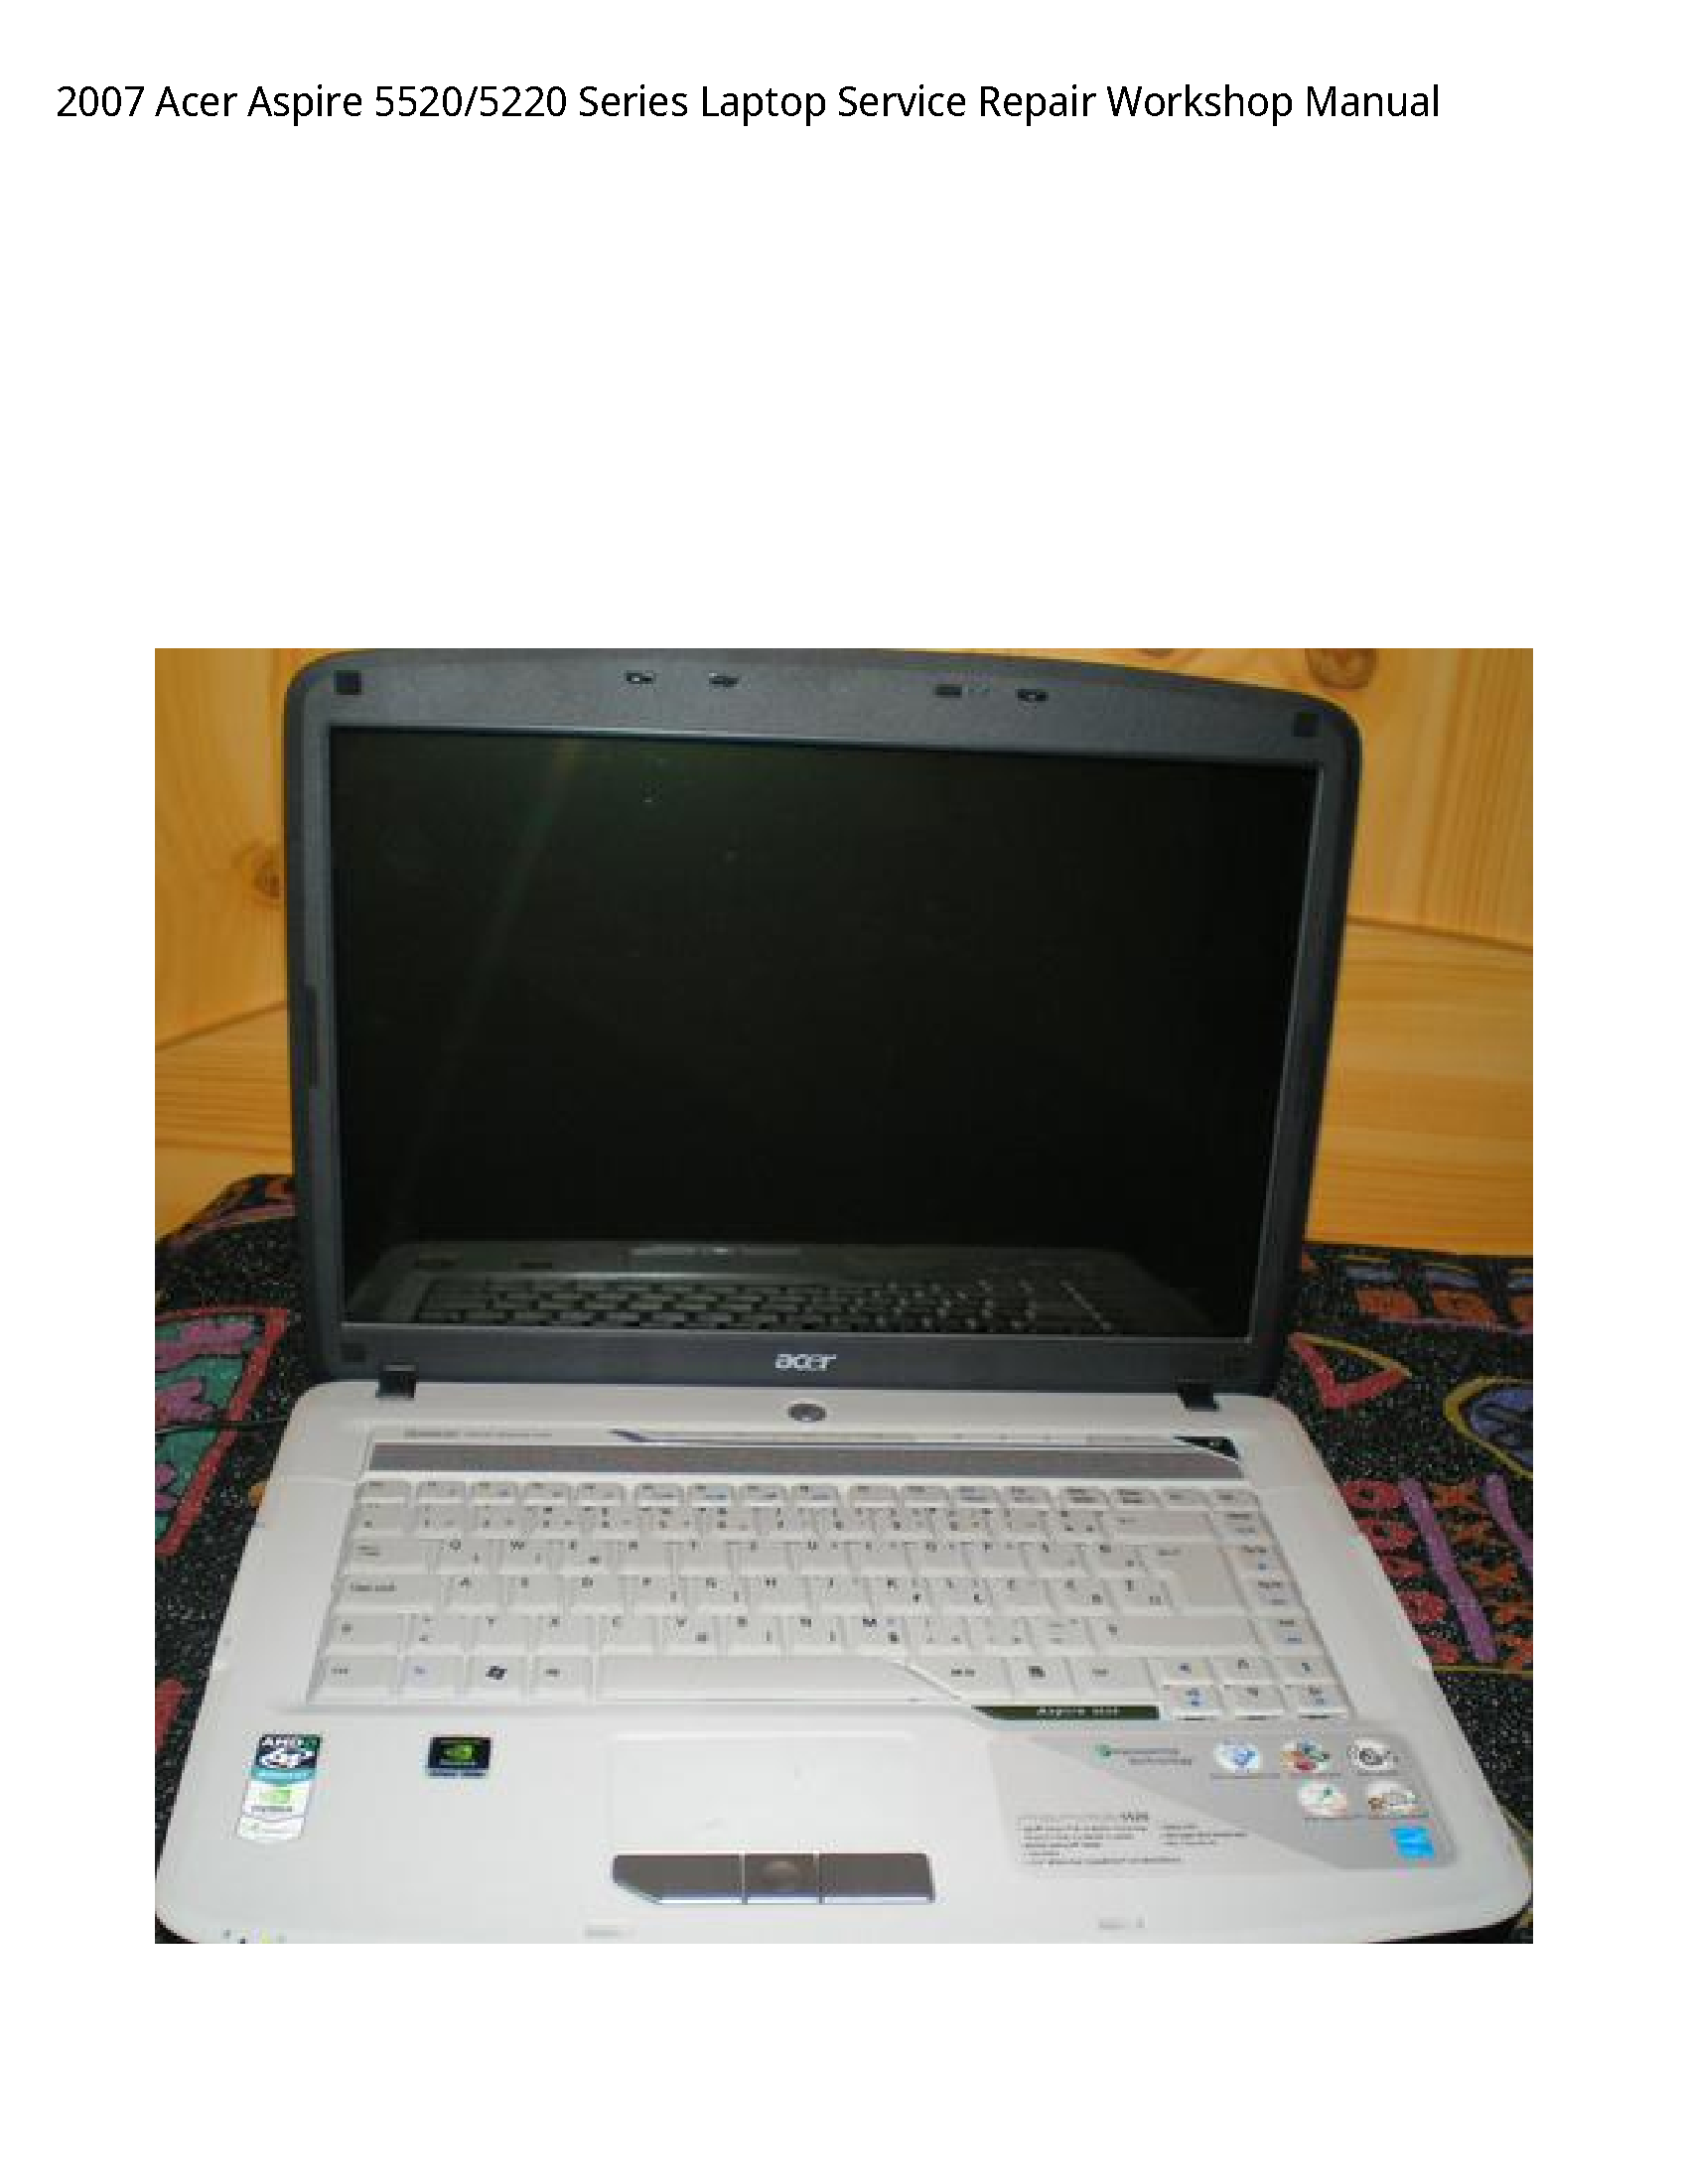 Acer 5520 Aspire Series Laptop manual